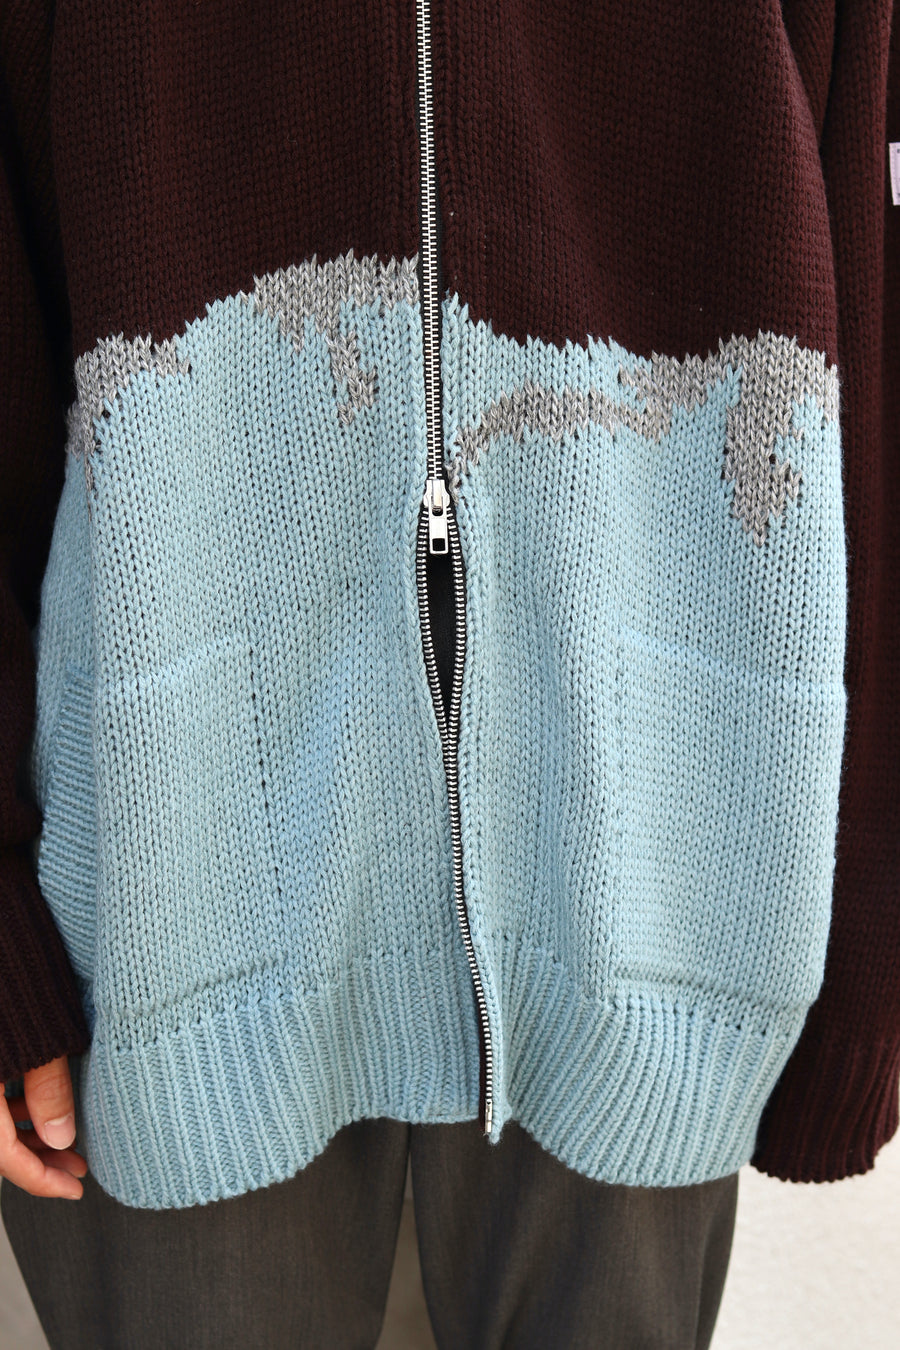 elephant TRIBAL fabrics William Cowichan sweater(BROWN)